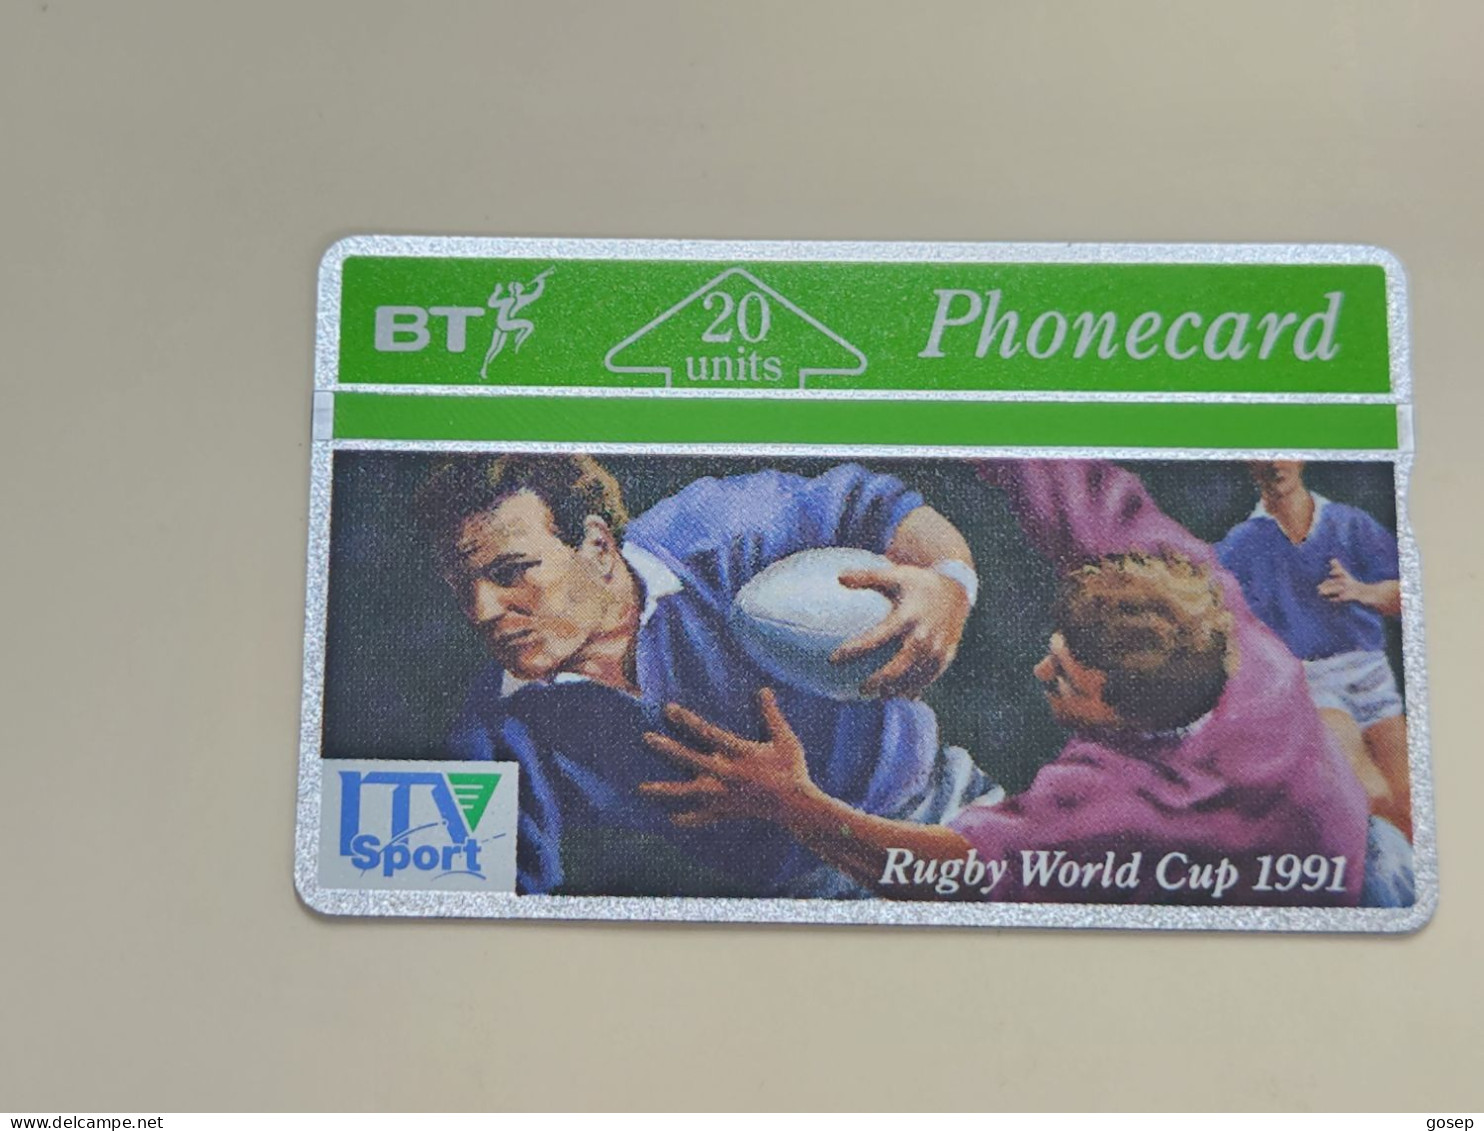 United Kingdom-(BTA021)-RUGBY WORLD CUP-(20units)-(48)-(148G17919)-price Cataloge6.00£-mint-card+1card Prepiad Free - BT Advertising Issues